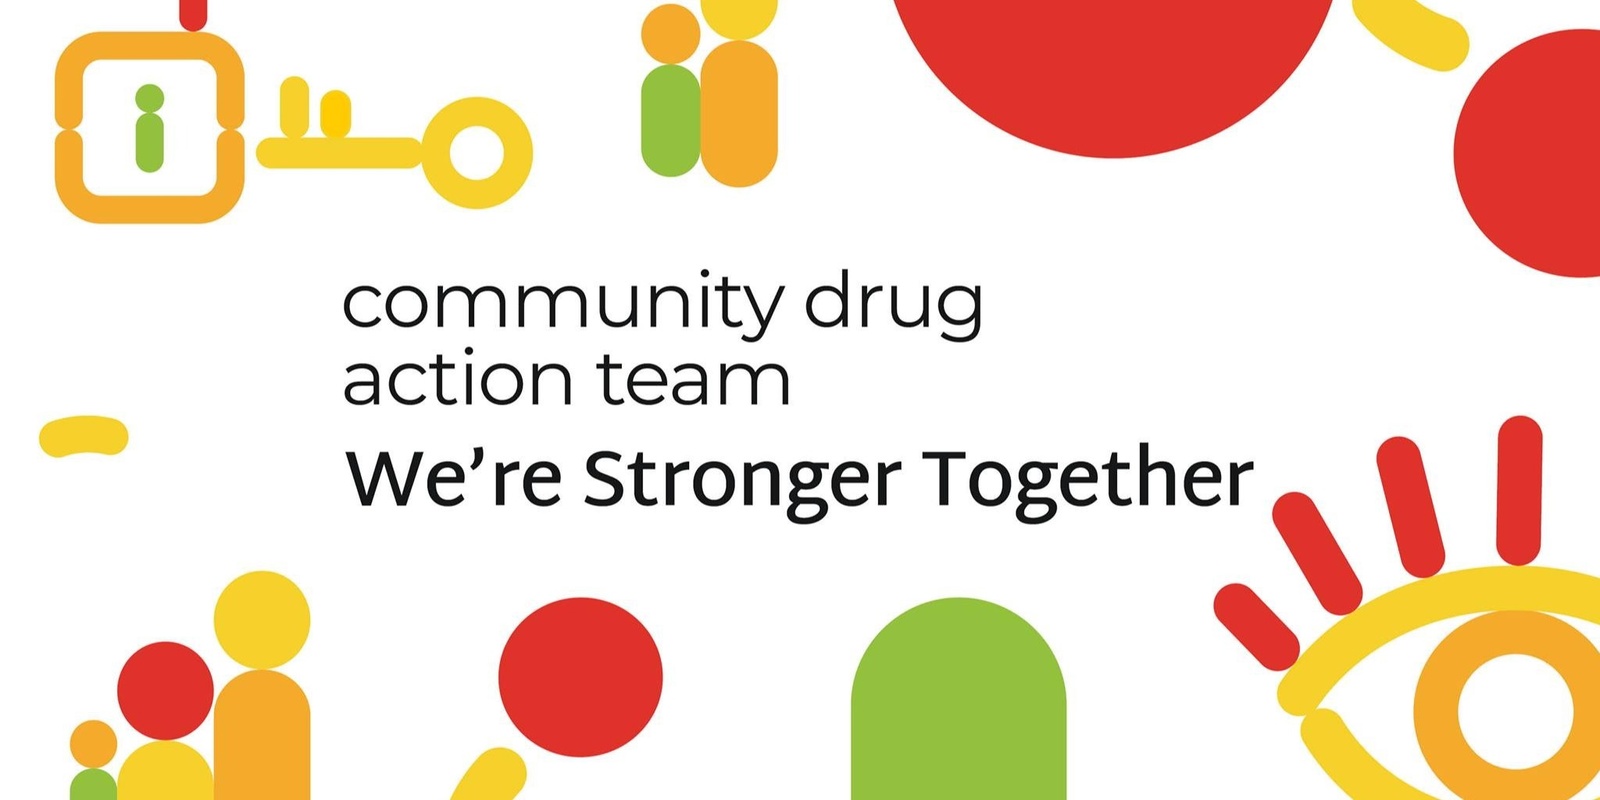 St George Community Drug Action Team's banner